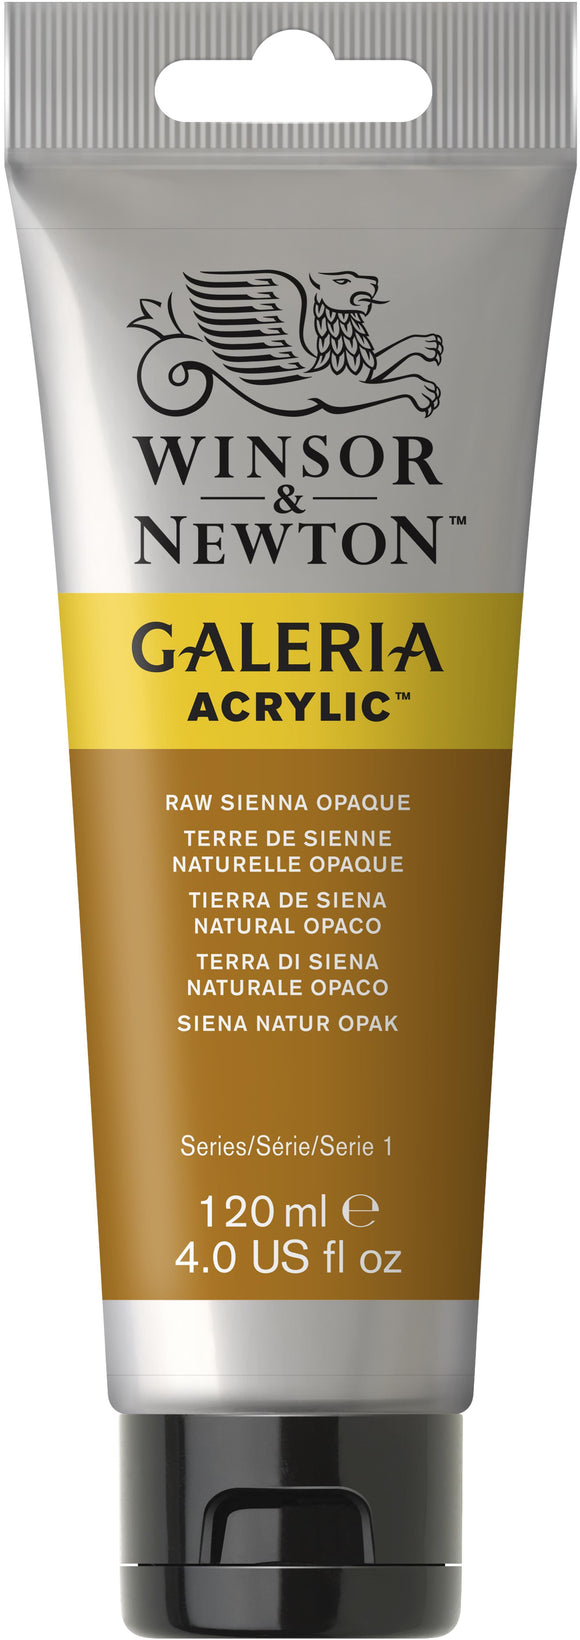 Winsor & Newton Galeria Acrylic Raw Sienna Opaque 120Ml